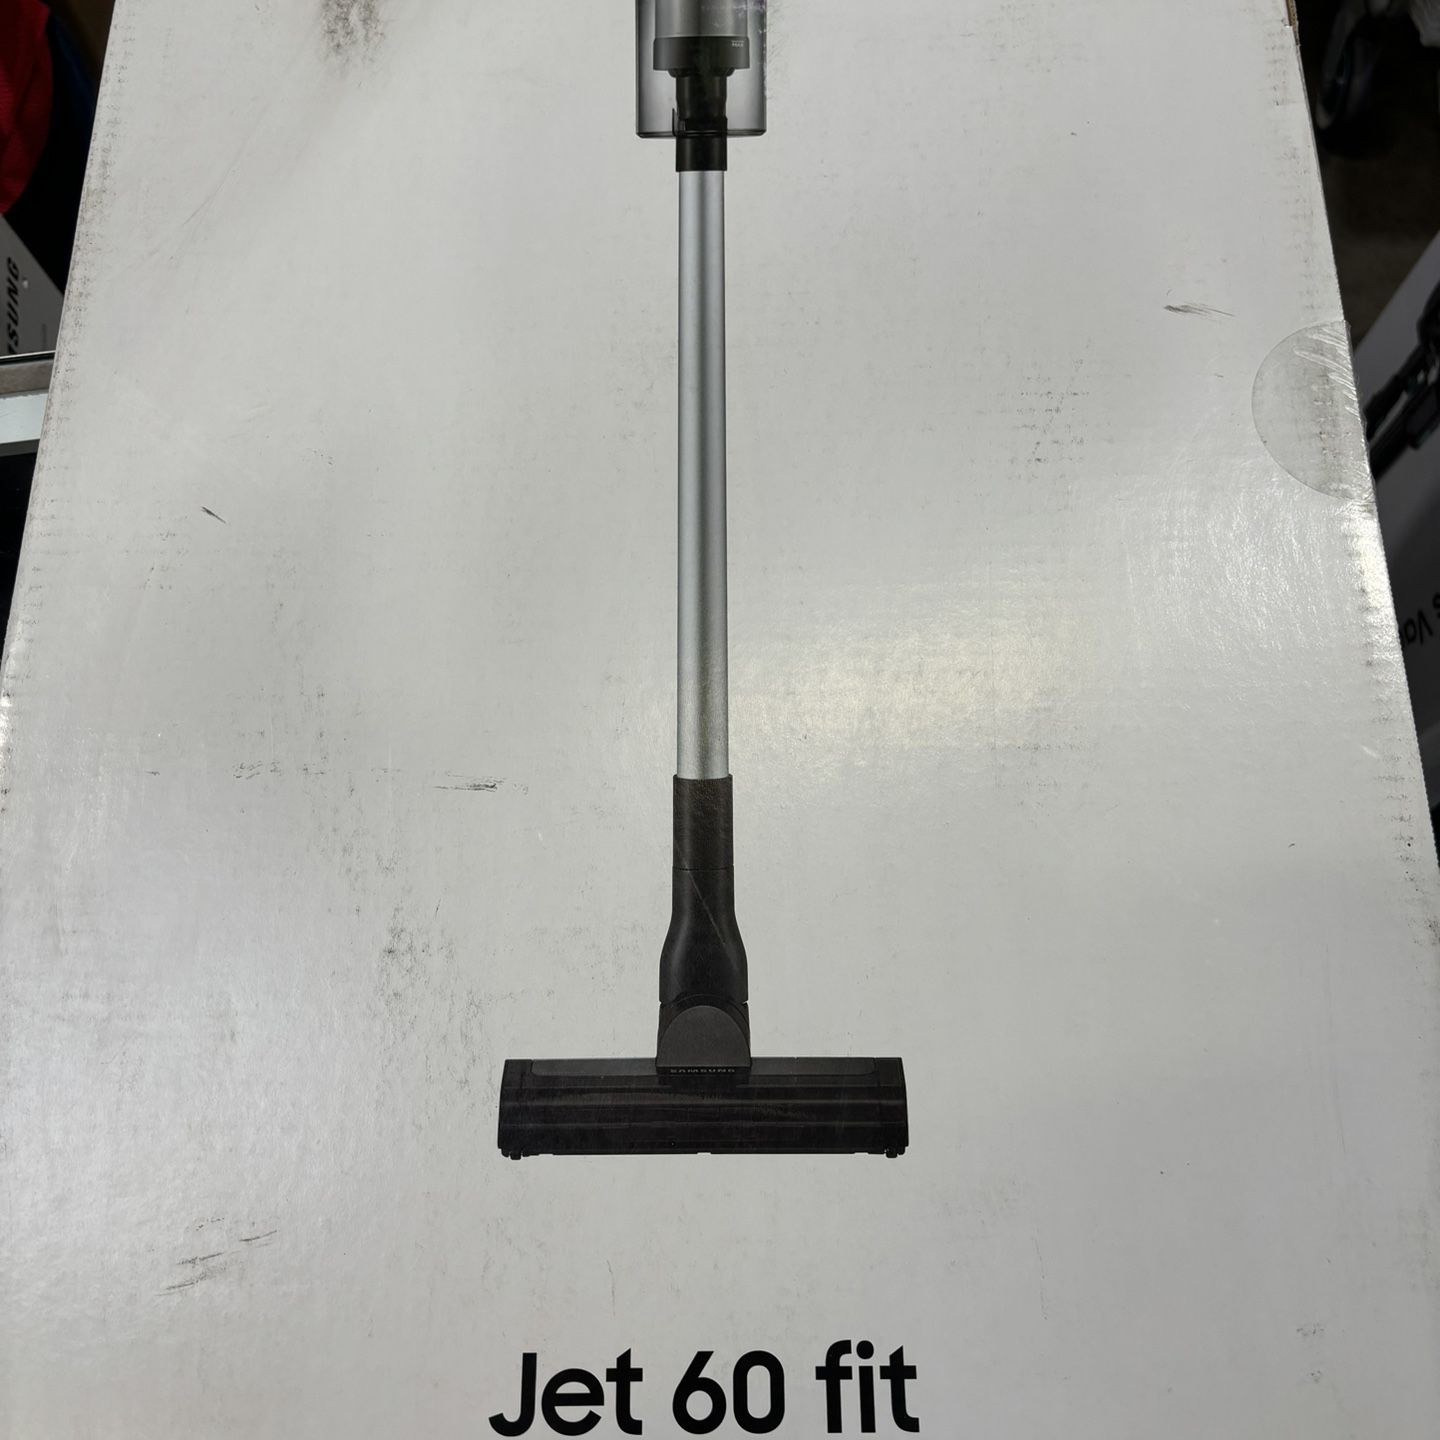 Samsung Jet 60 Fit